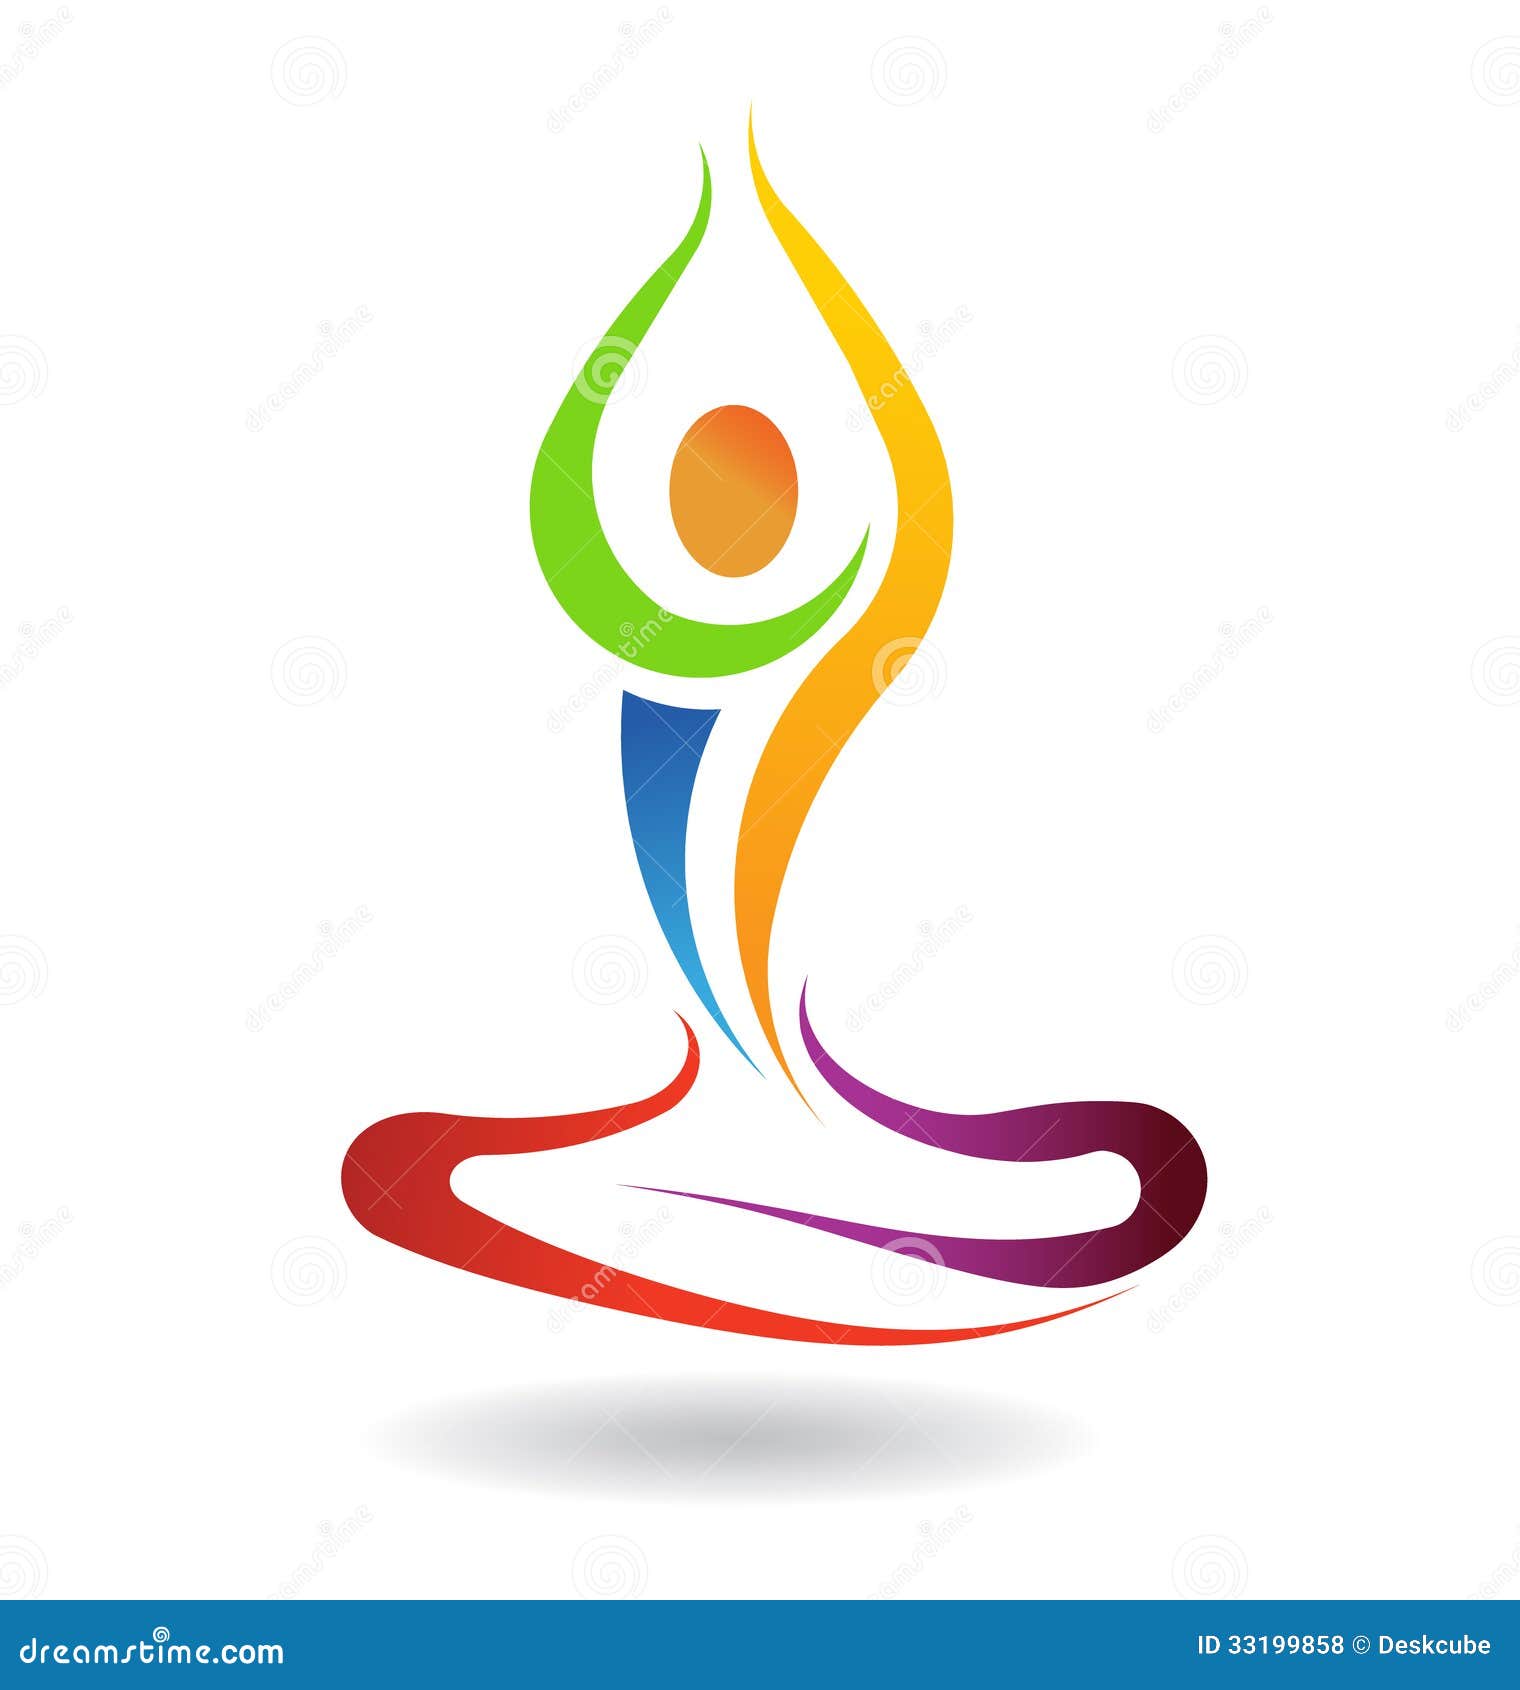 yoga logo clip art - photo #23